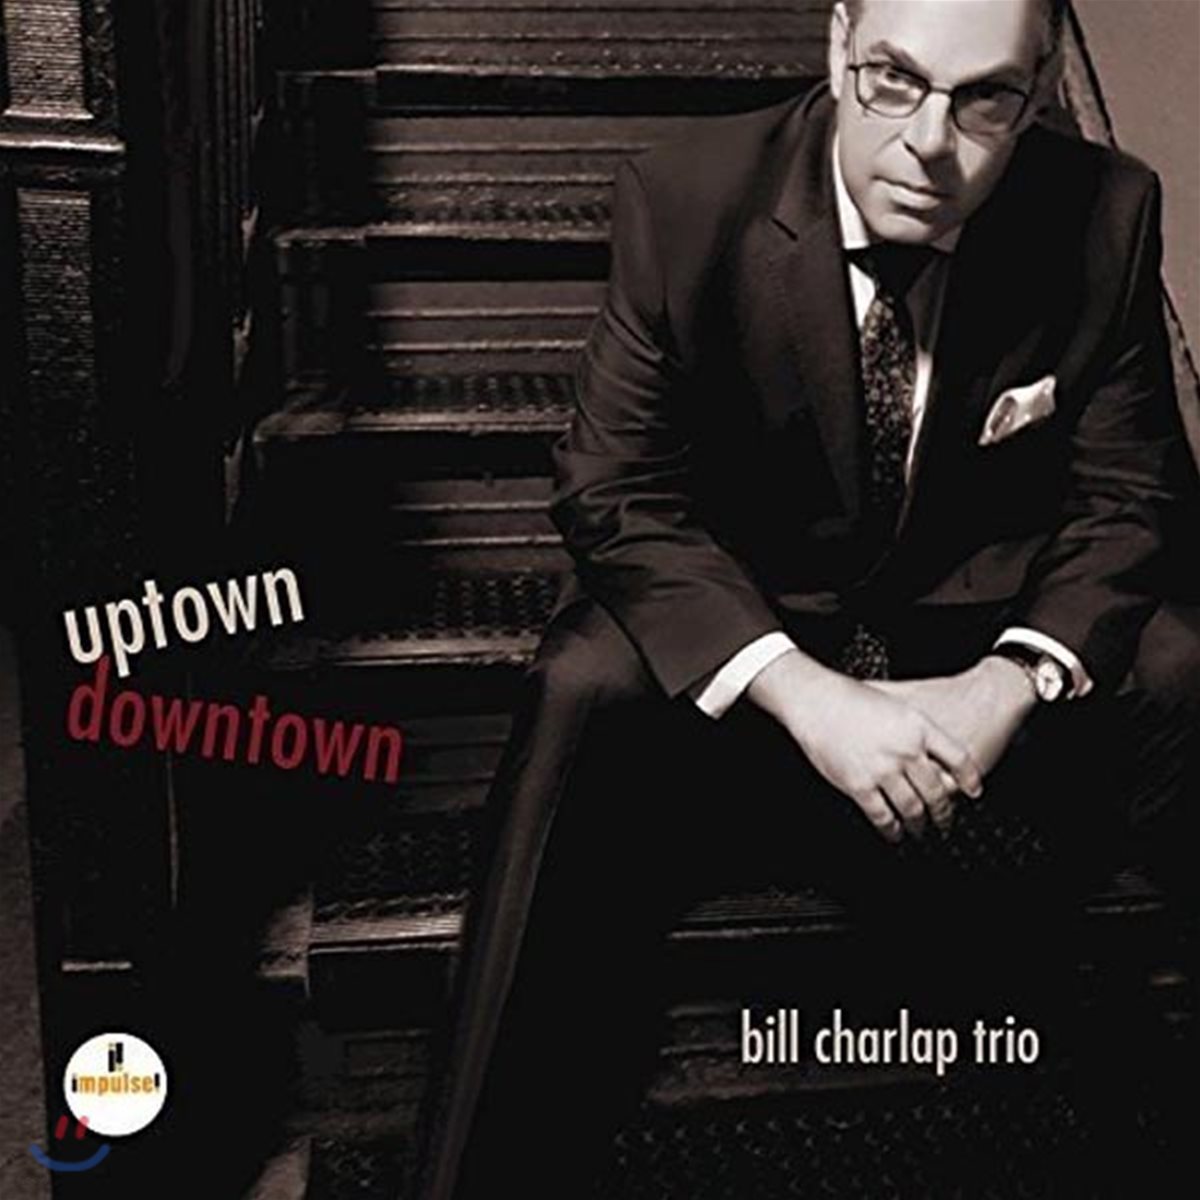 Bill Charlap Trio (빌 찰랩 트리오) - Uptown, Downtown 